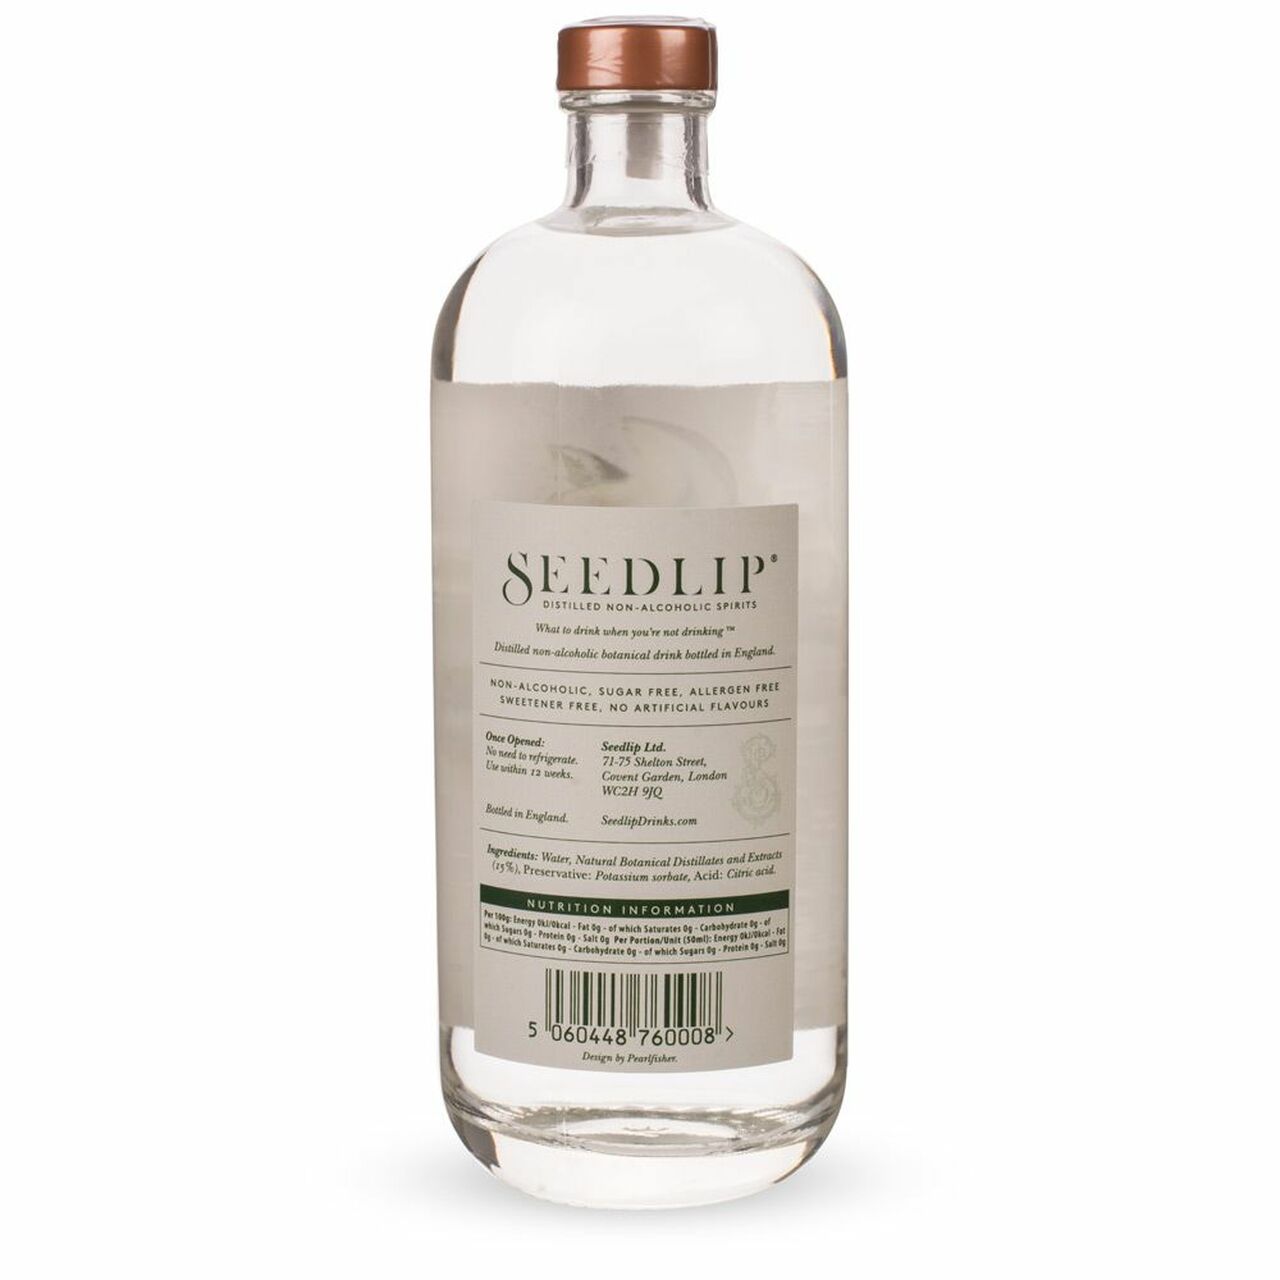 Seedlip Spice 94 Non-Alcoholic Spirit 700 ml